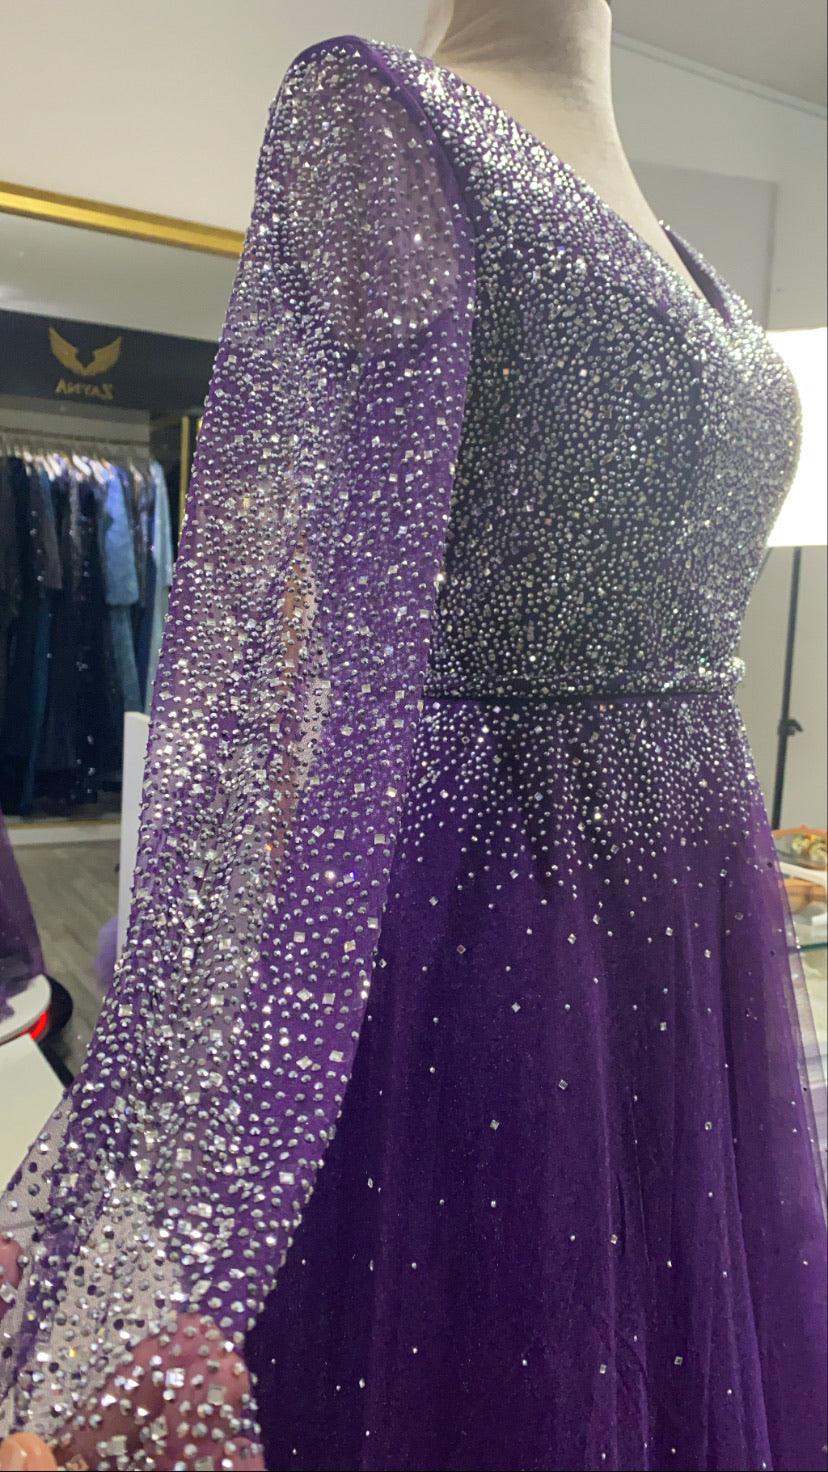 Purple elegant dress